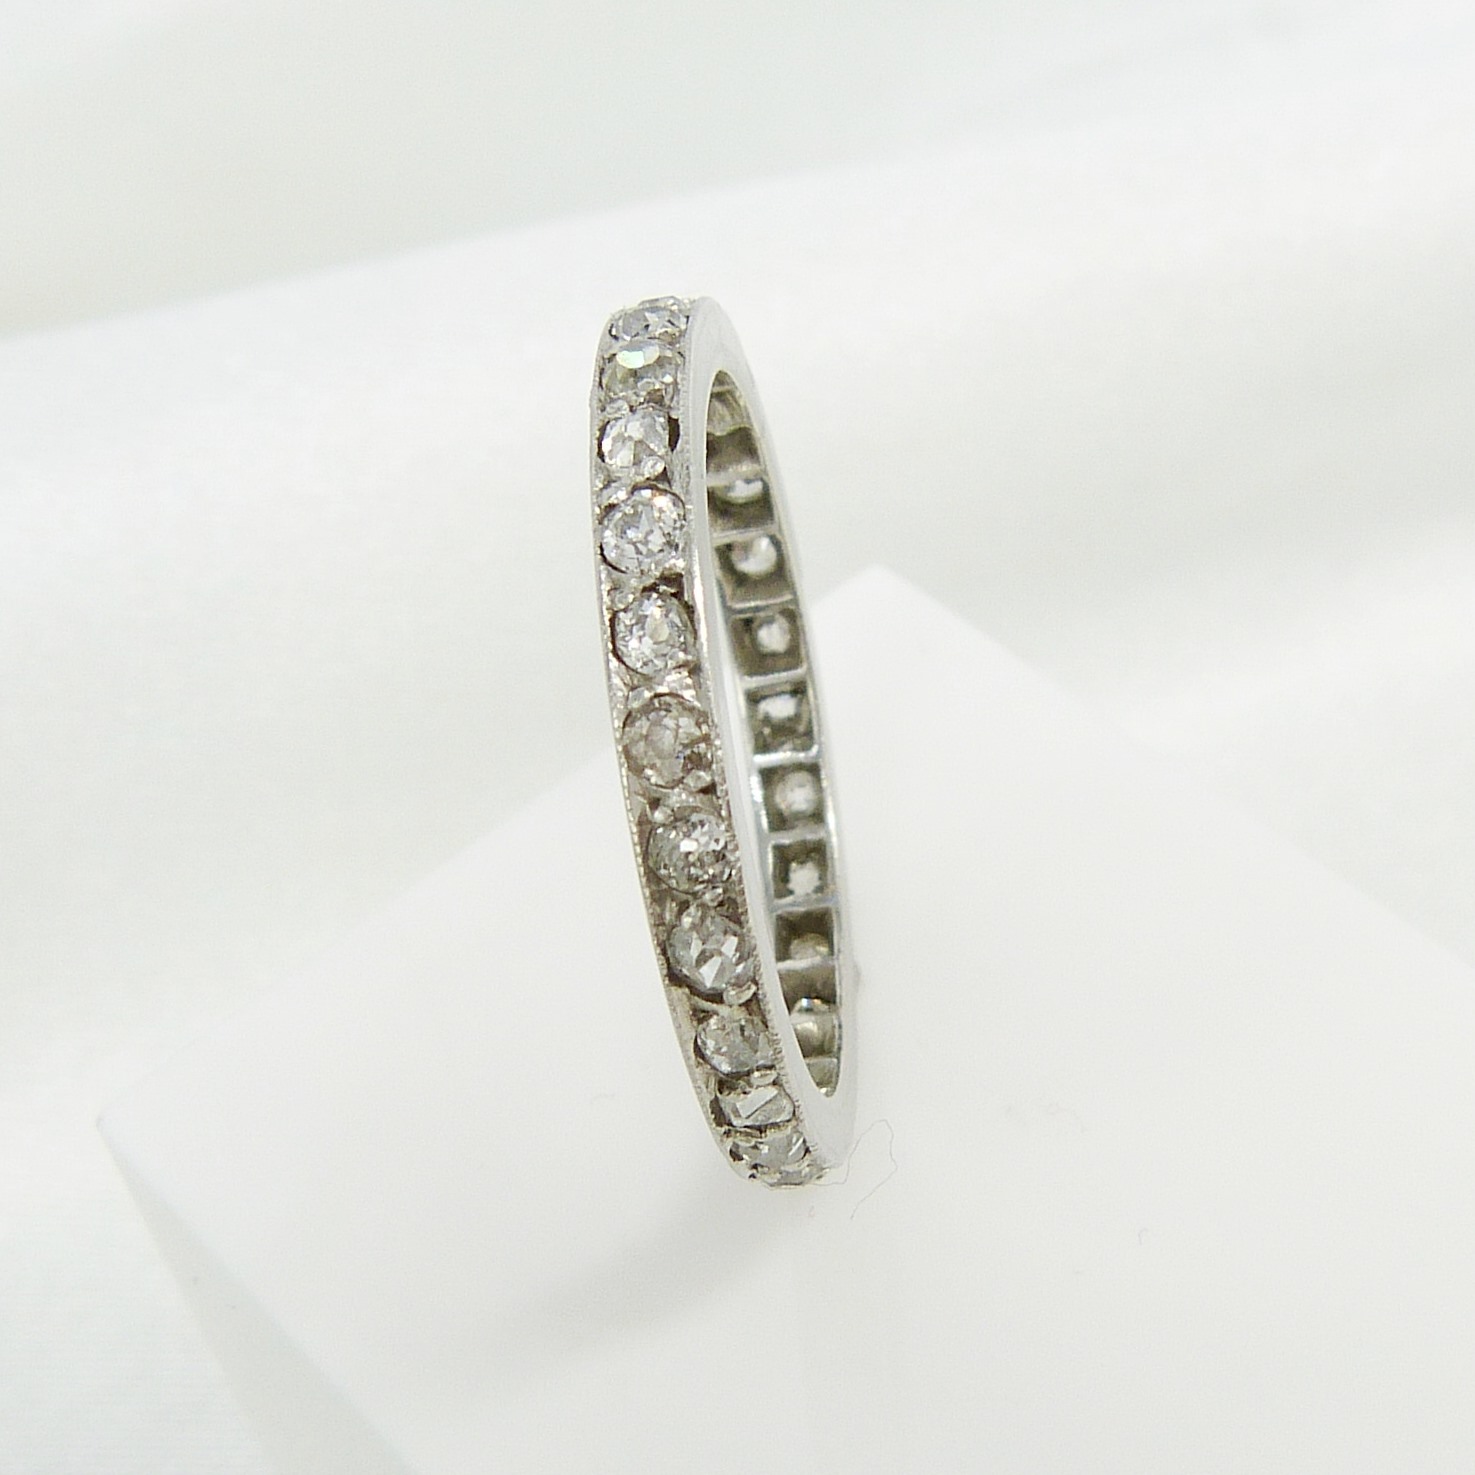 Genuine antique platinum full eternity ring set with 0.85 carats old-cut diamonds - Image 7 of 8